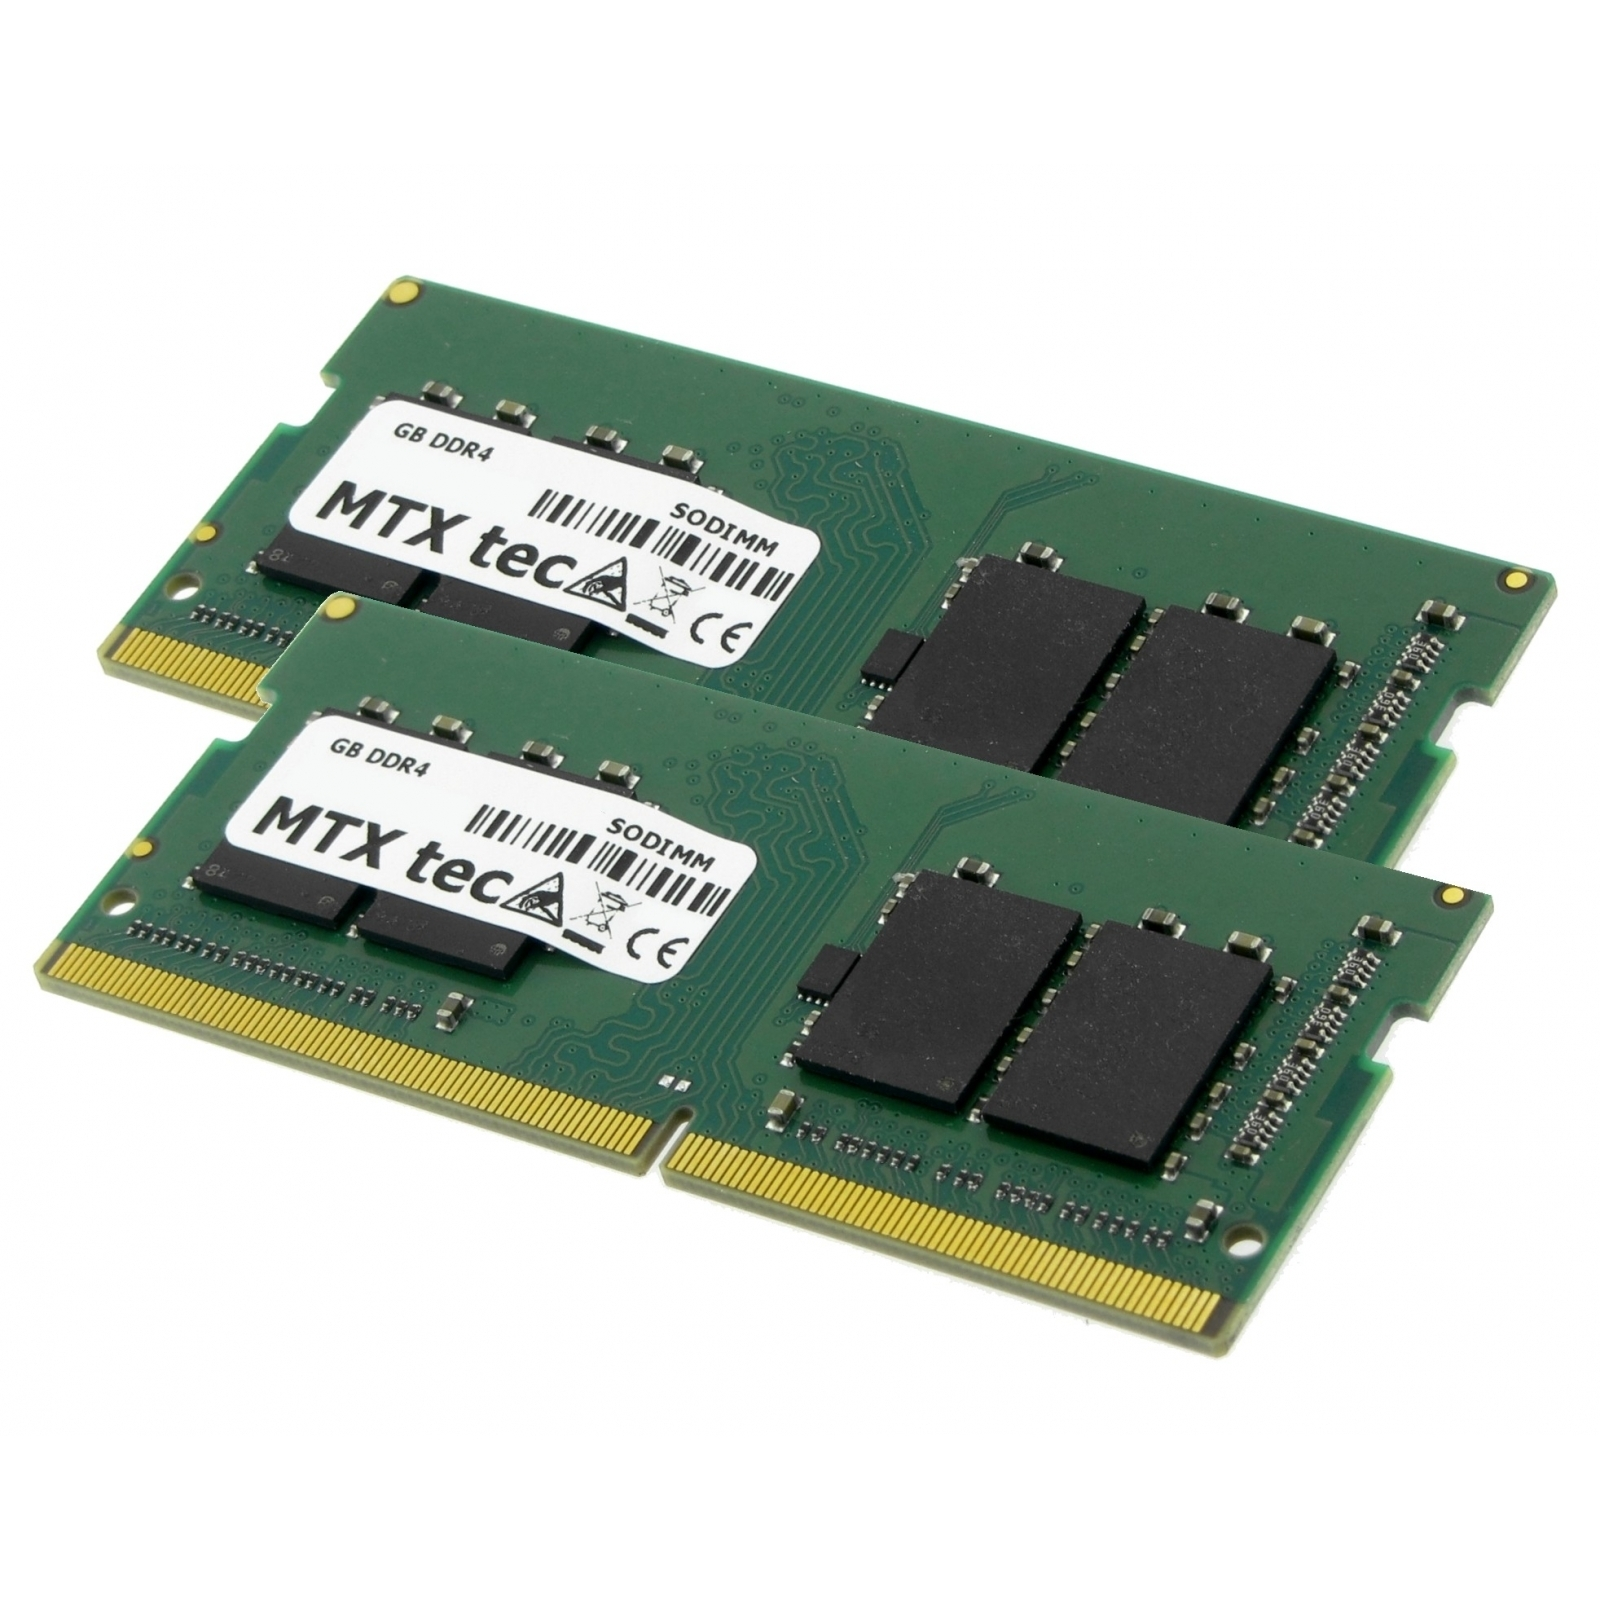 Notebook-Speicher DDR4 Arbeitsspeicher Kit PC4-19200 2x16GB 32GB 260pin MTXTEC Notebook GB 16 SODIMM DDR4 2400MHz